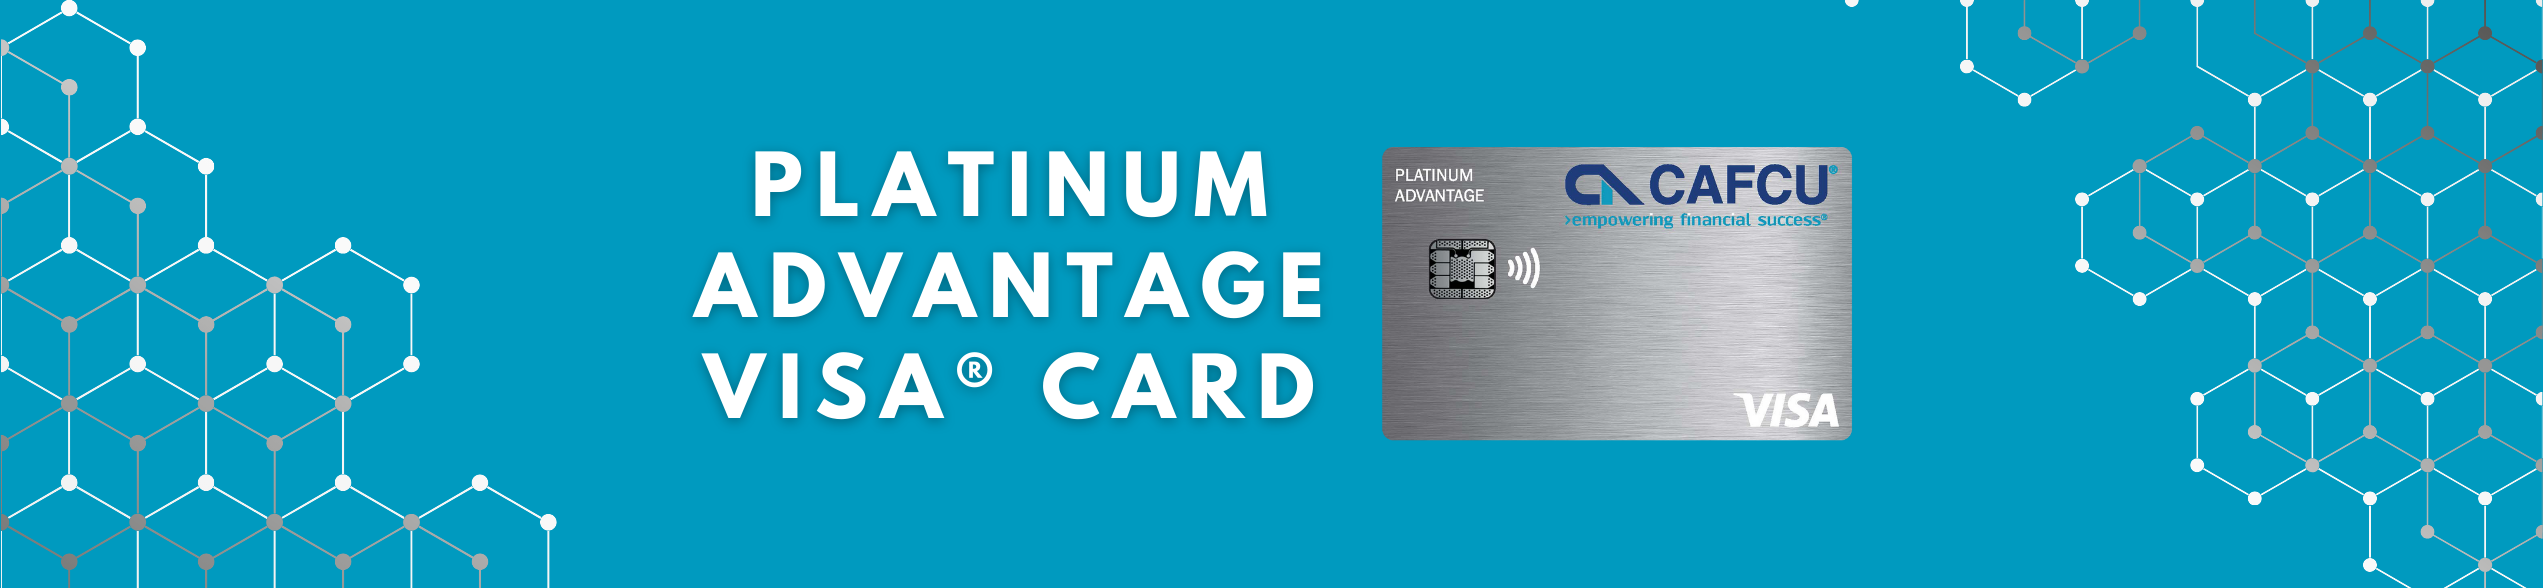 Platinum Advantage Visa Credit Card